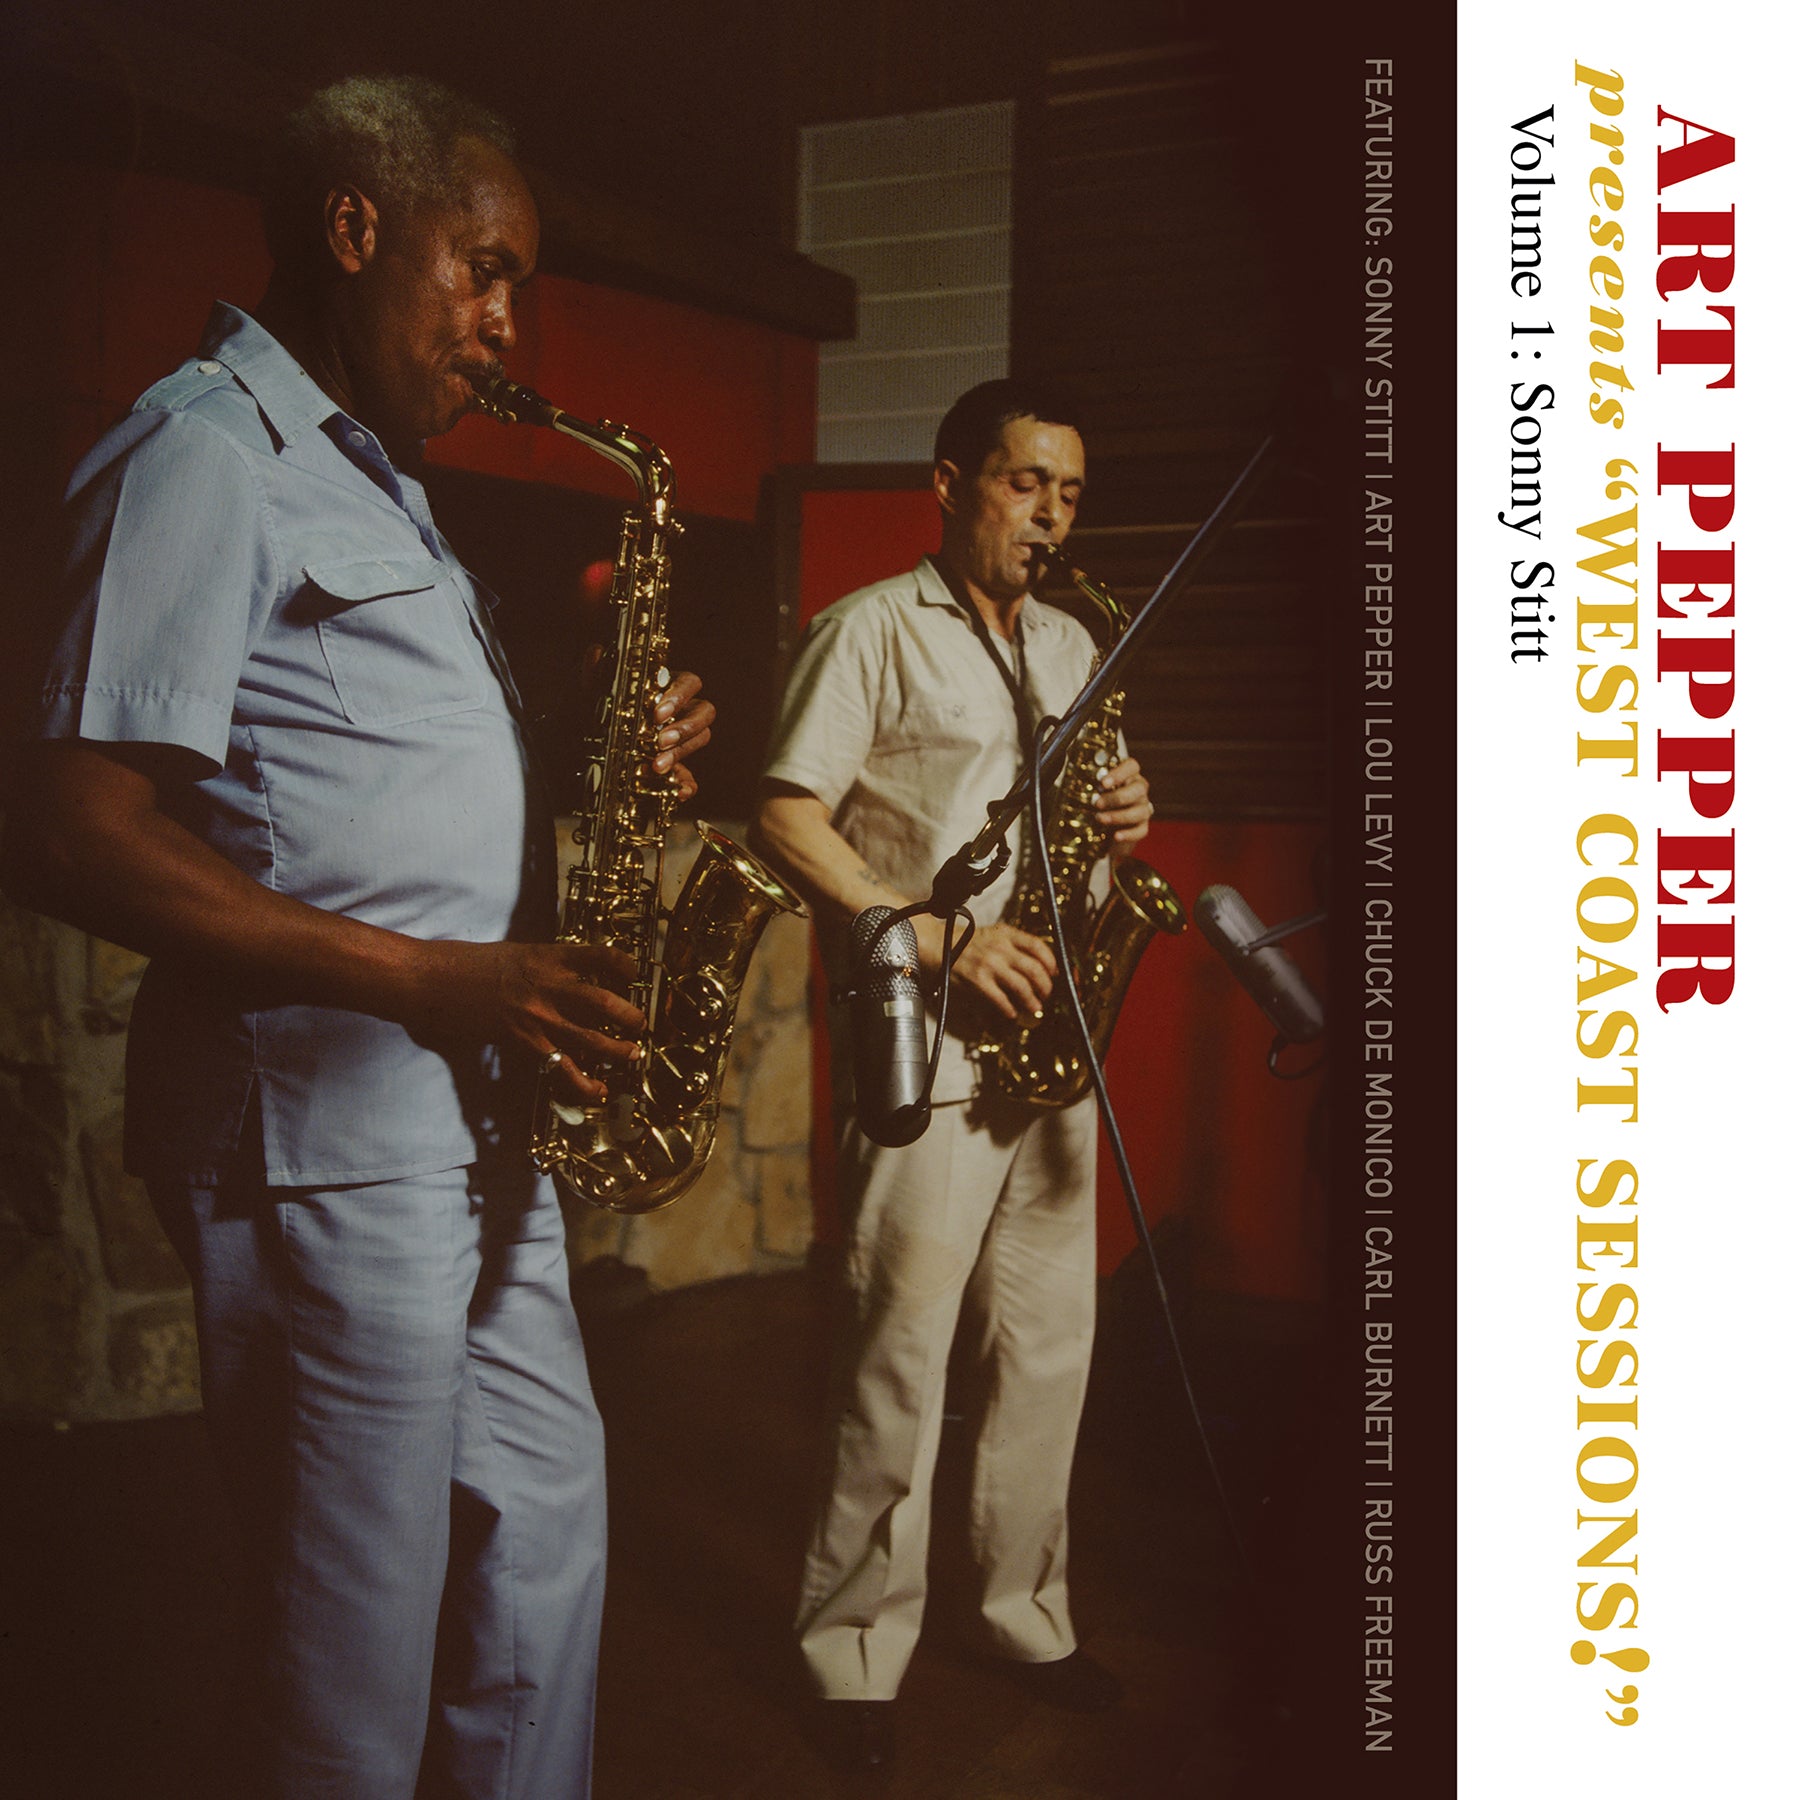 Art Pepper Presents “West Coast Sessions!” Volume 1: Sonny Stitt